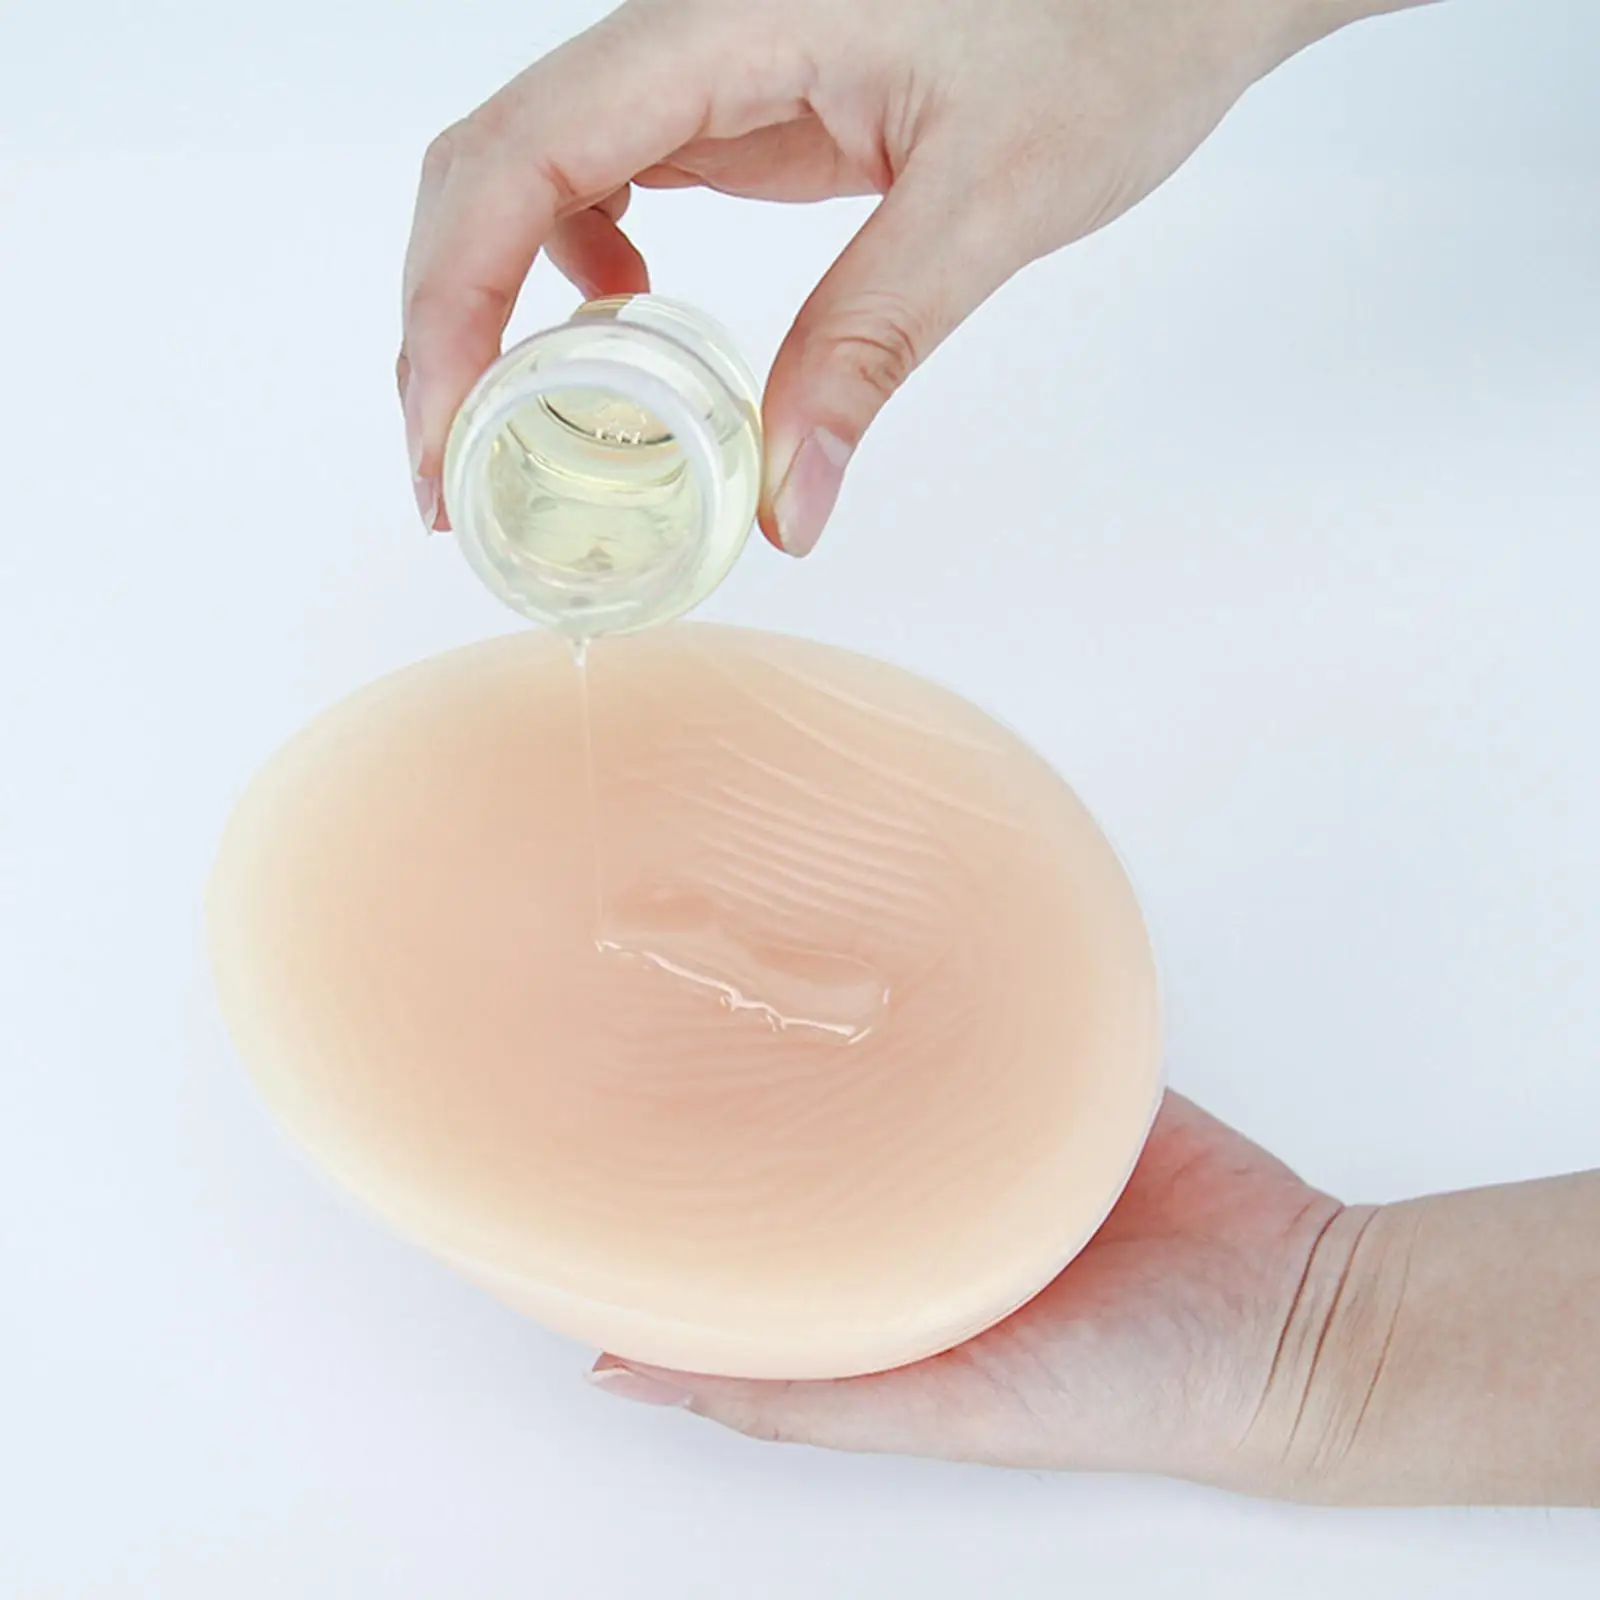 Breast Form Adhesive and Remover Bra Accessories Remove Silicone Adhesive Body Glue 50ml Adhesive Remover Adhesive Glue